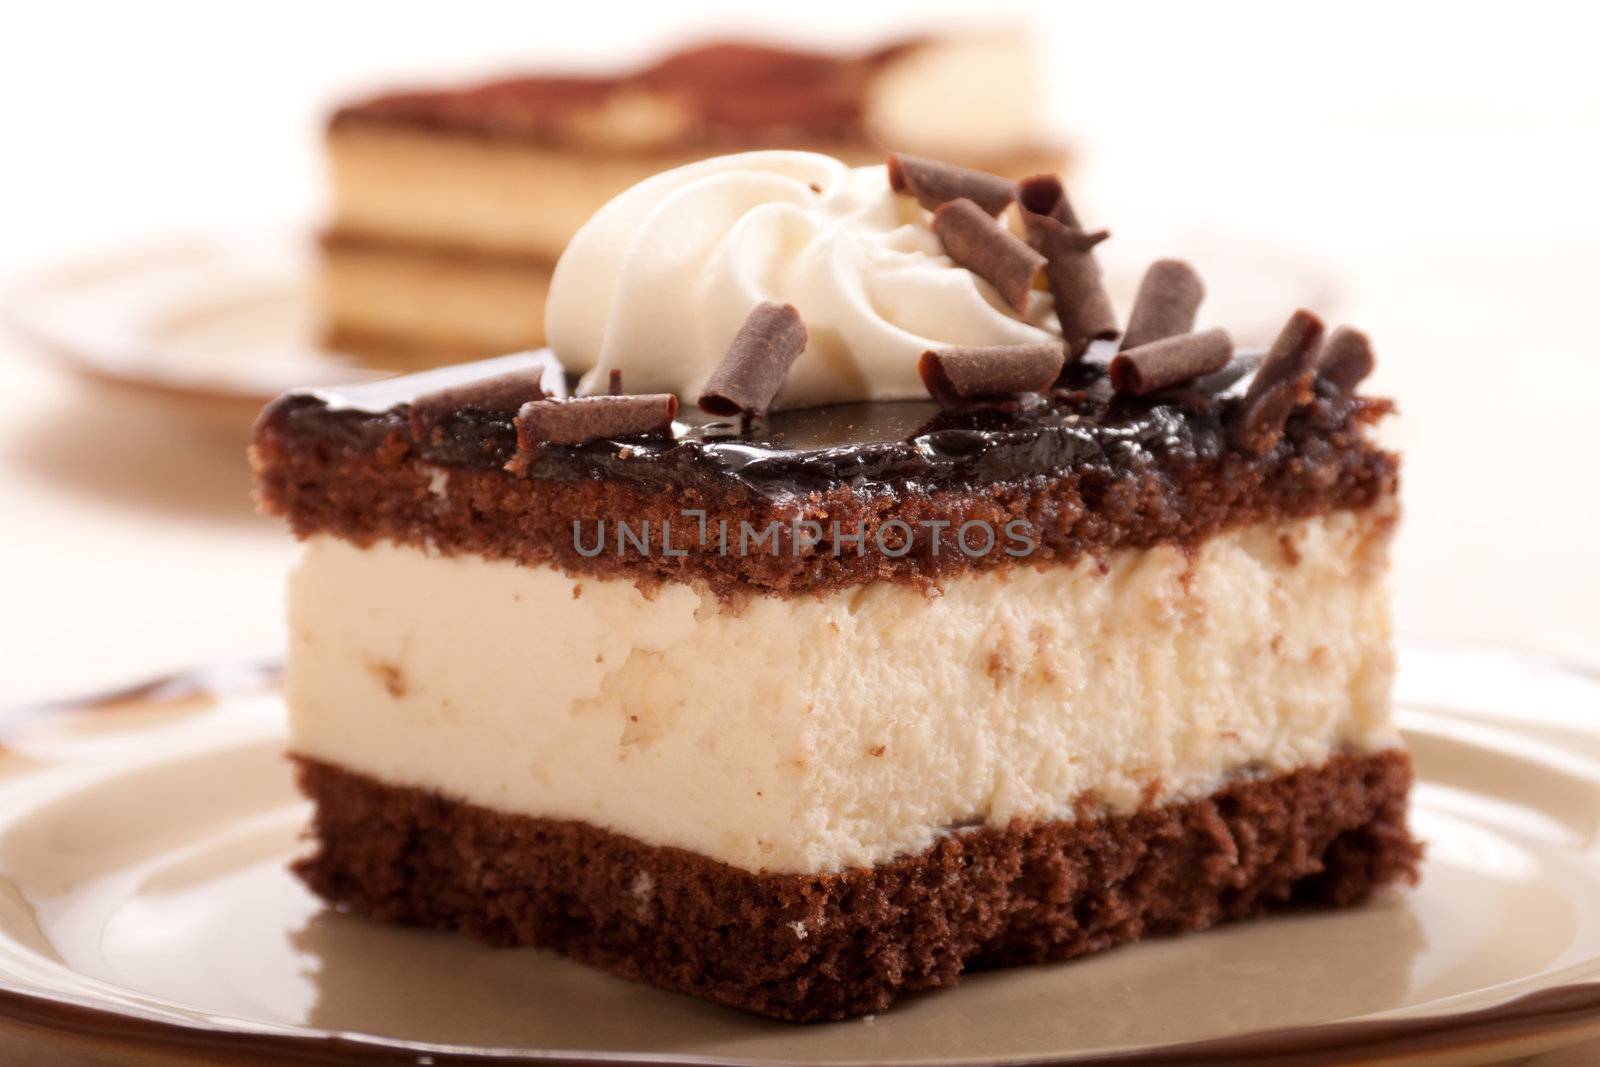 Slice of chocolate cream cake, on a plate